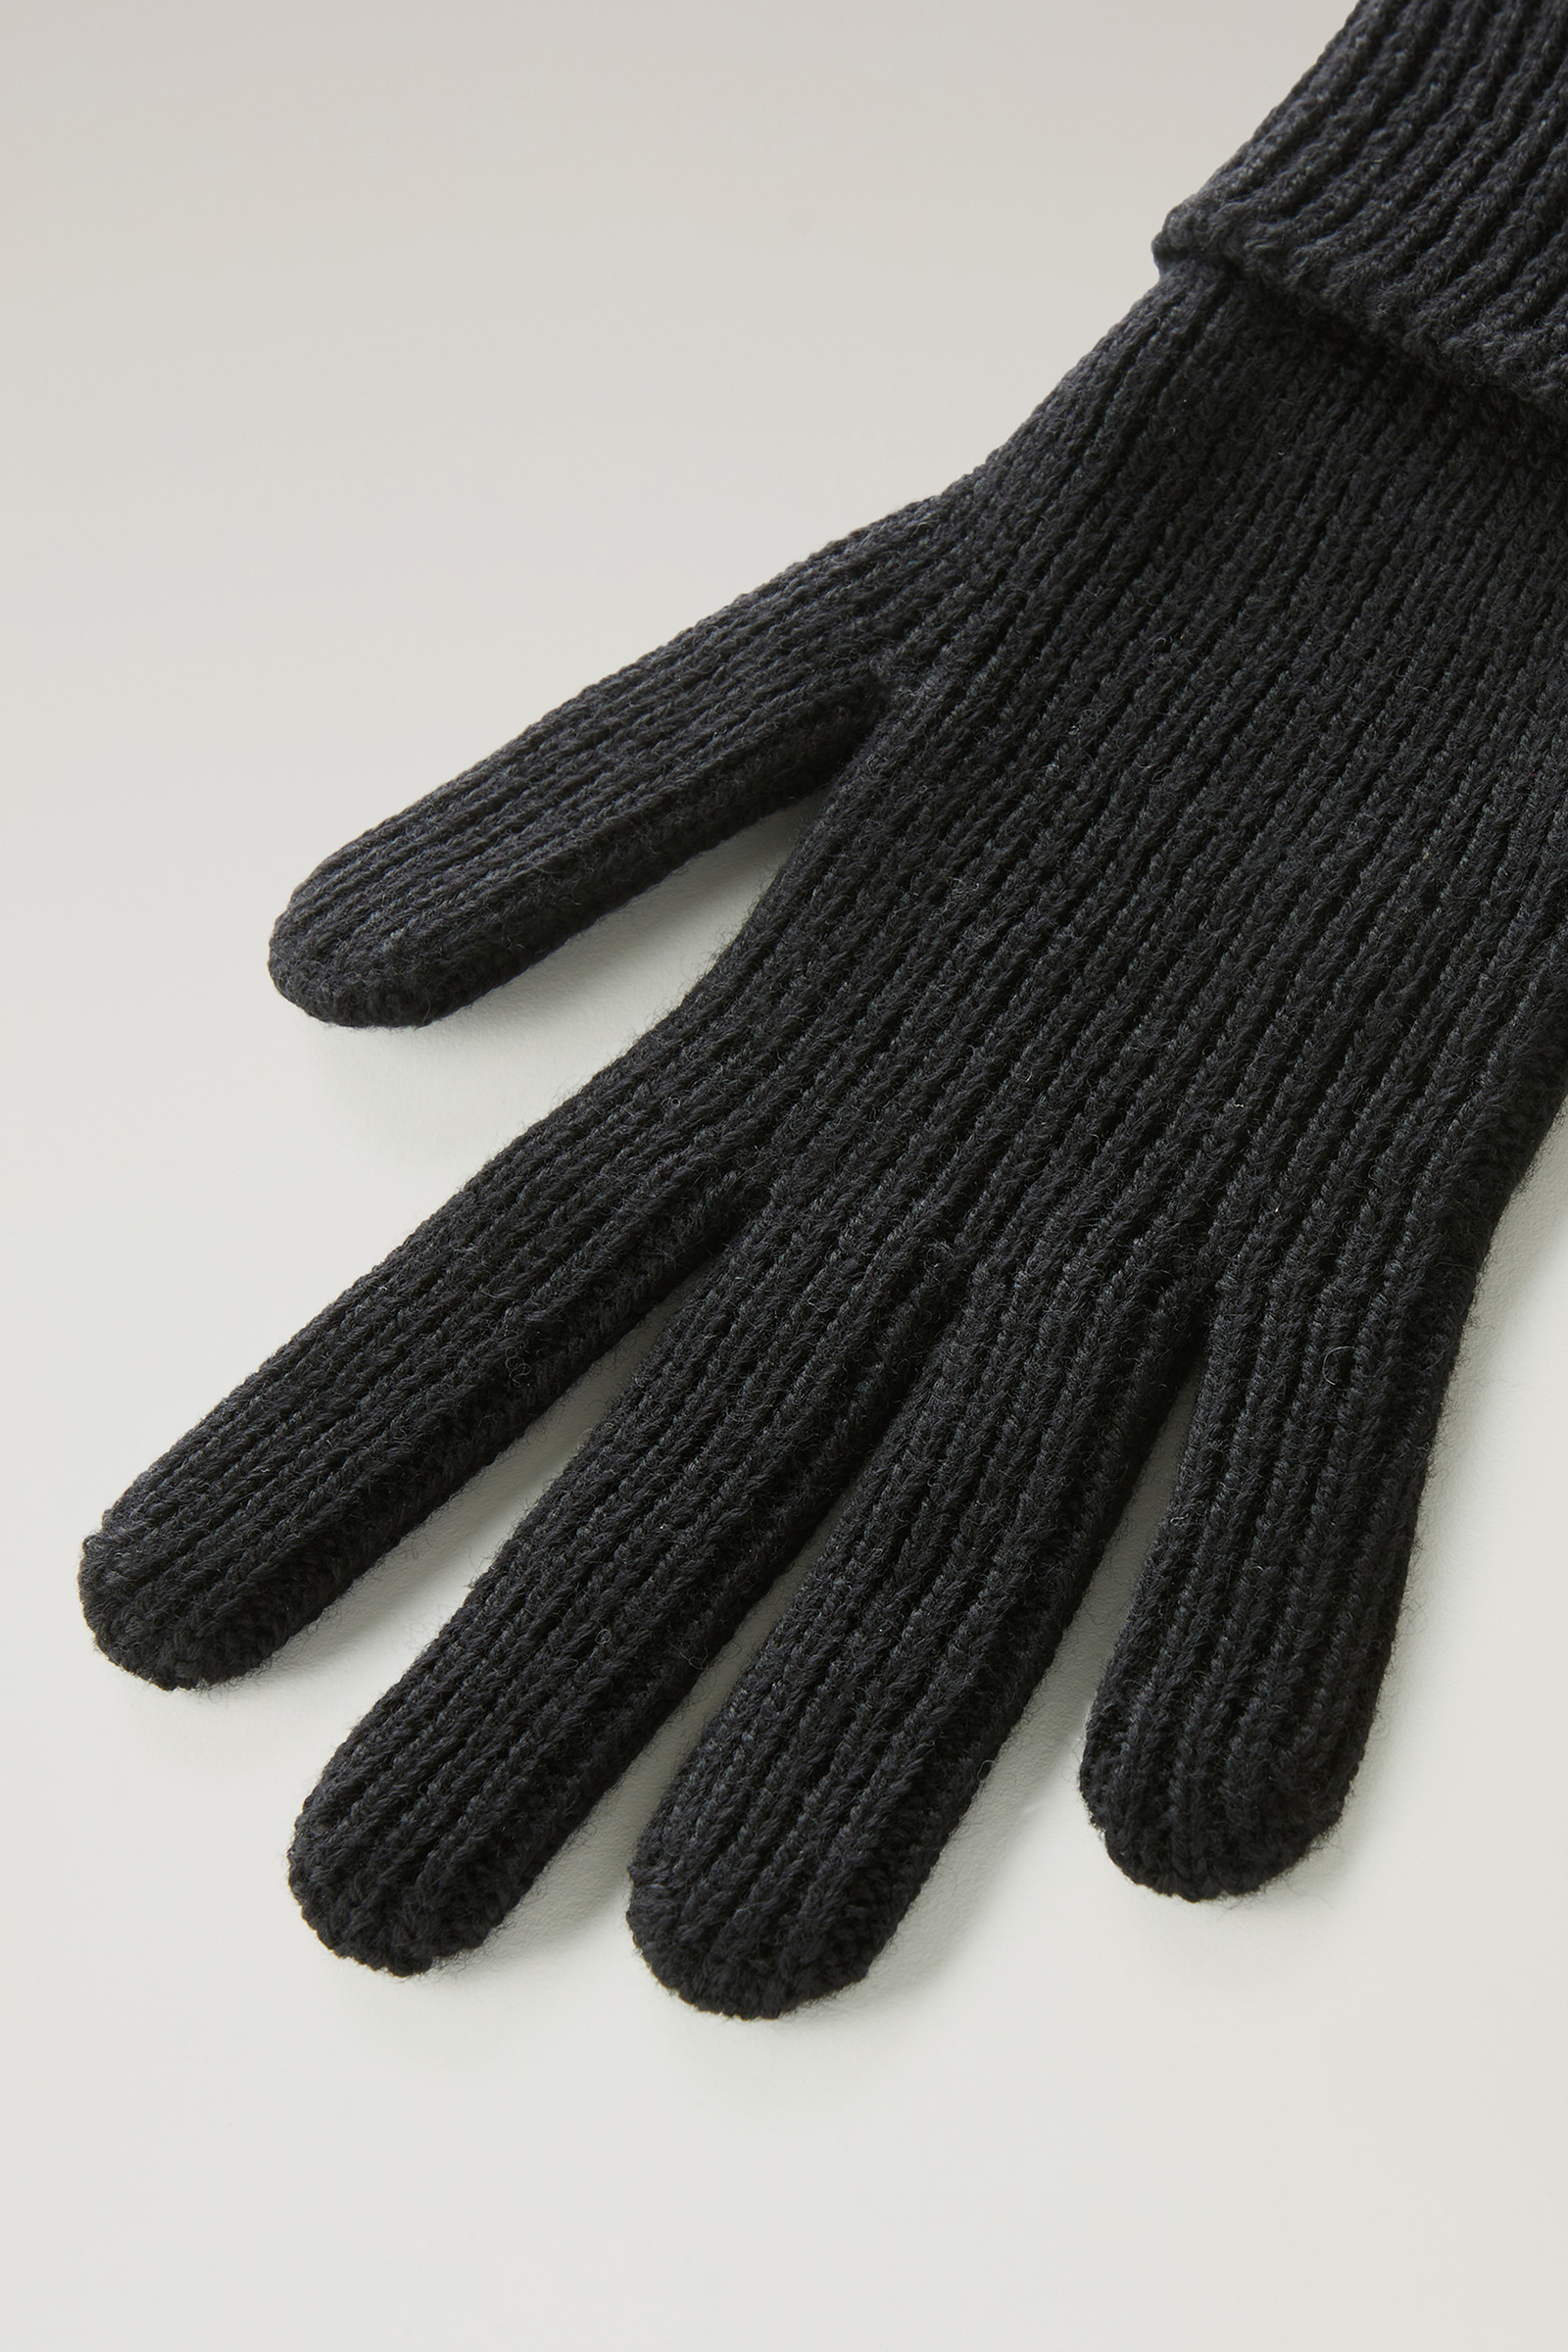 Virgin Gloves Woolrich Black Ribbed | Wool Men\'s Pure USA in Merino